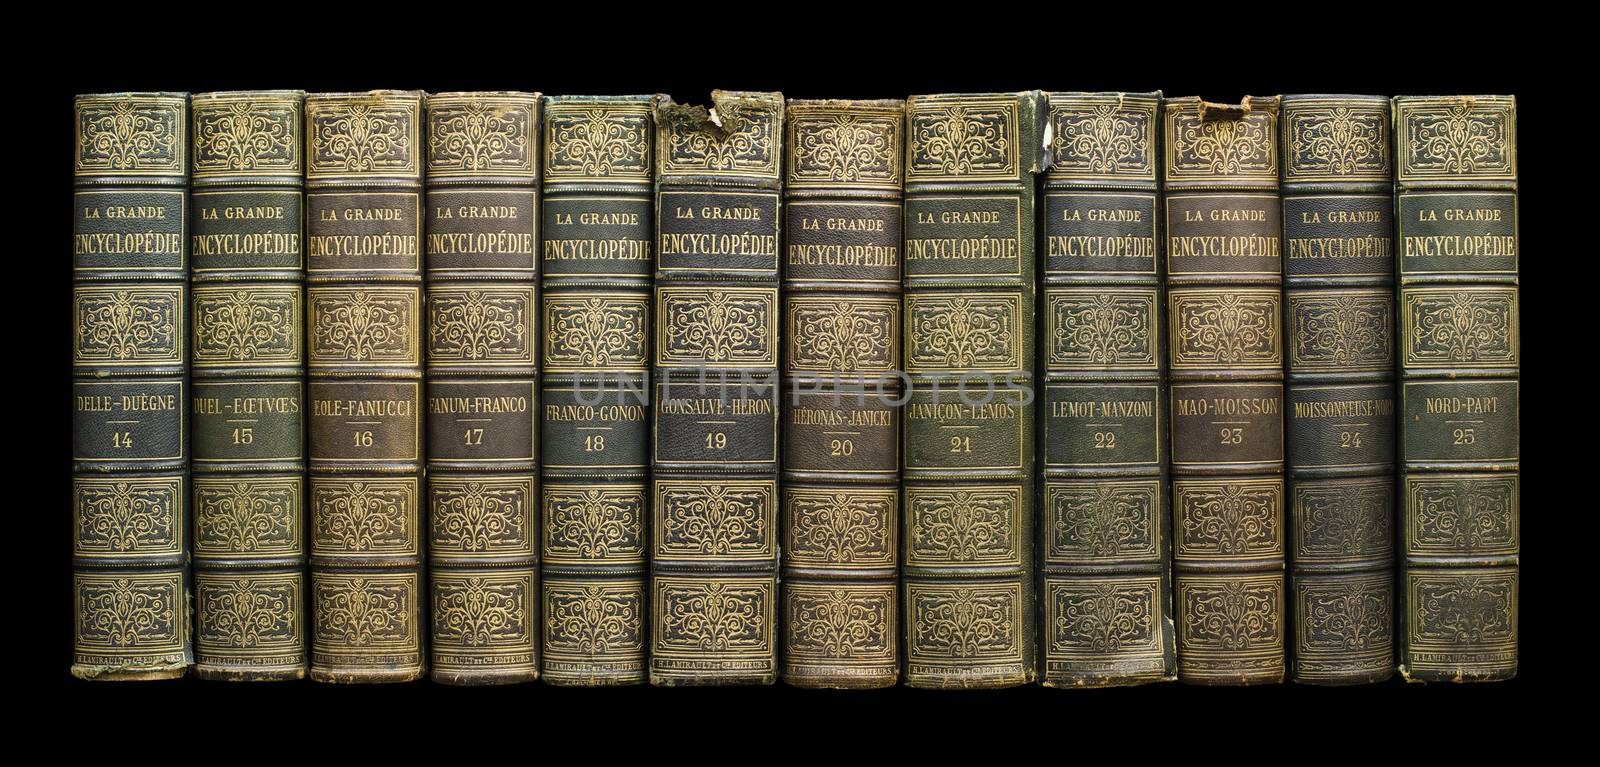 Old books on shelf. French encyclopedia